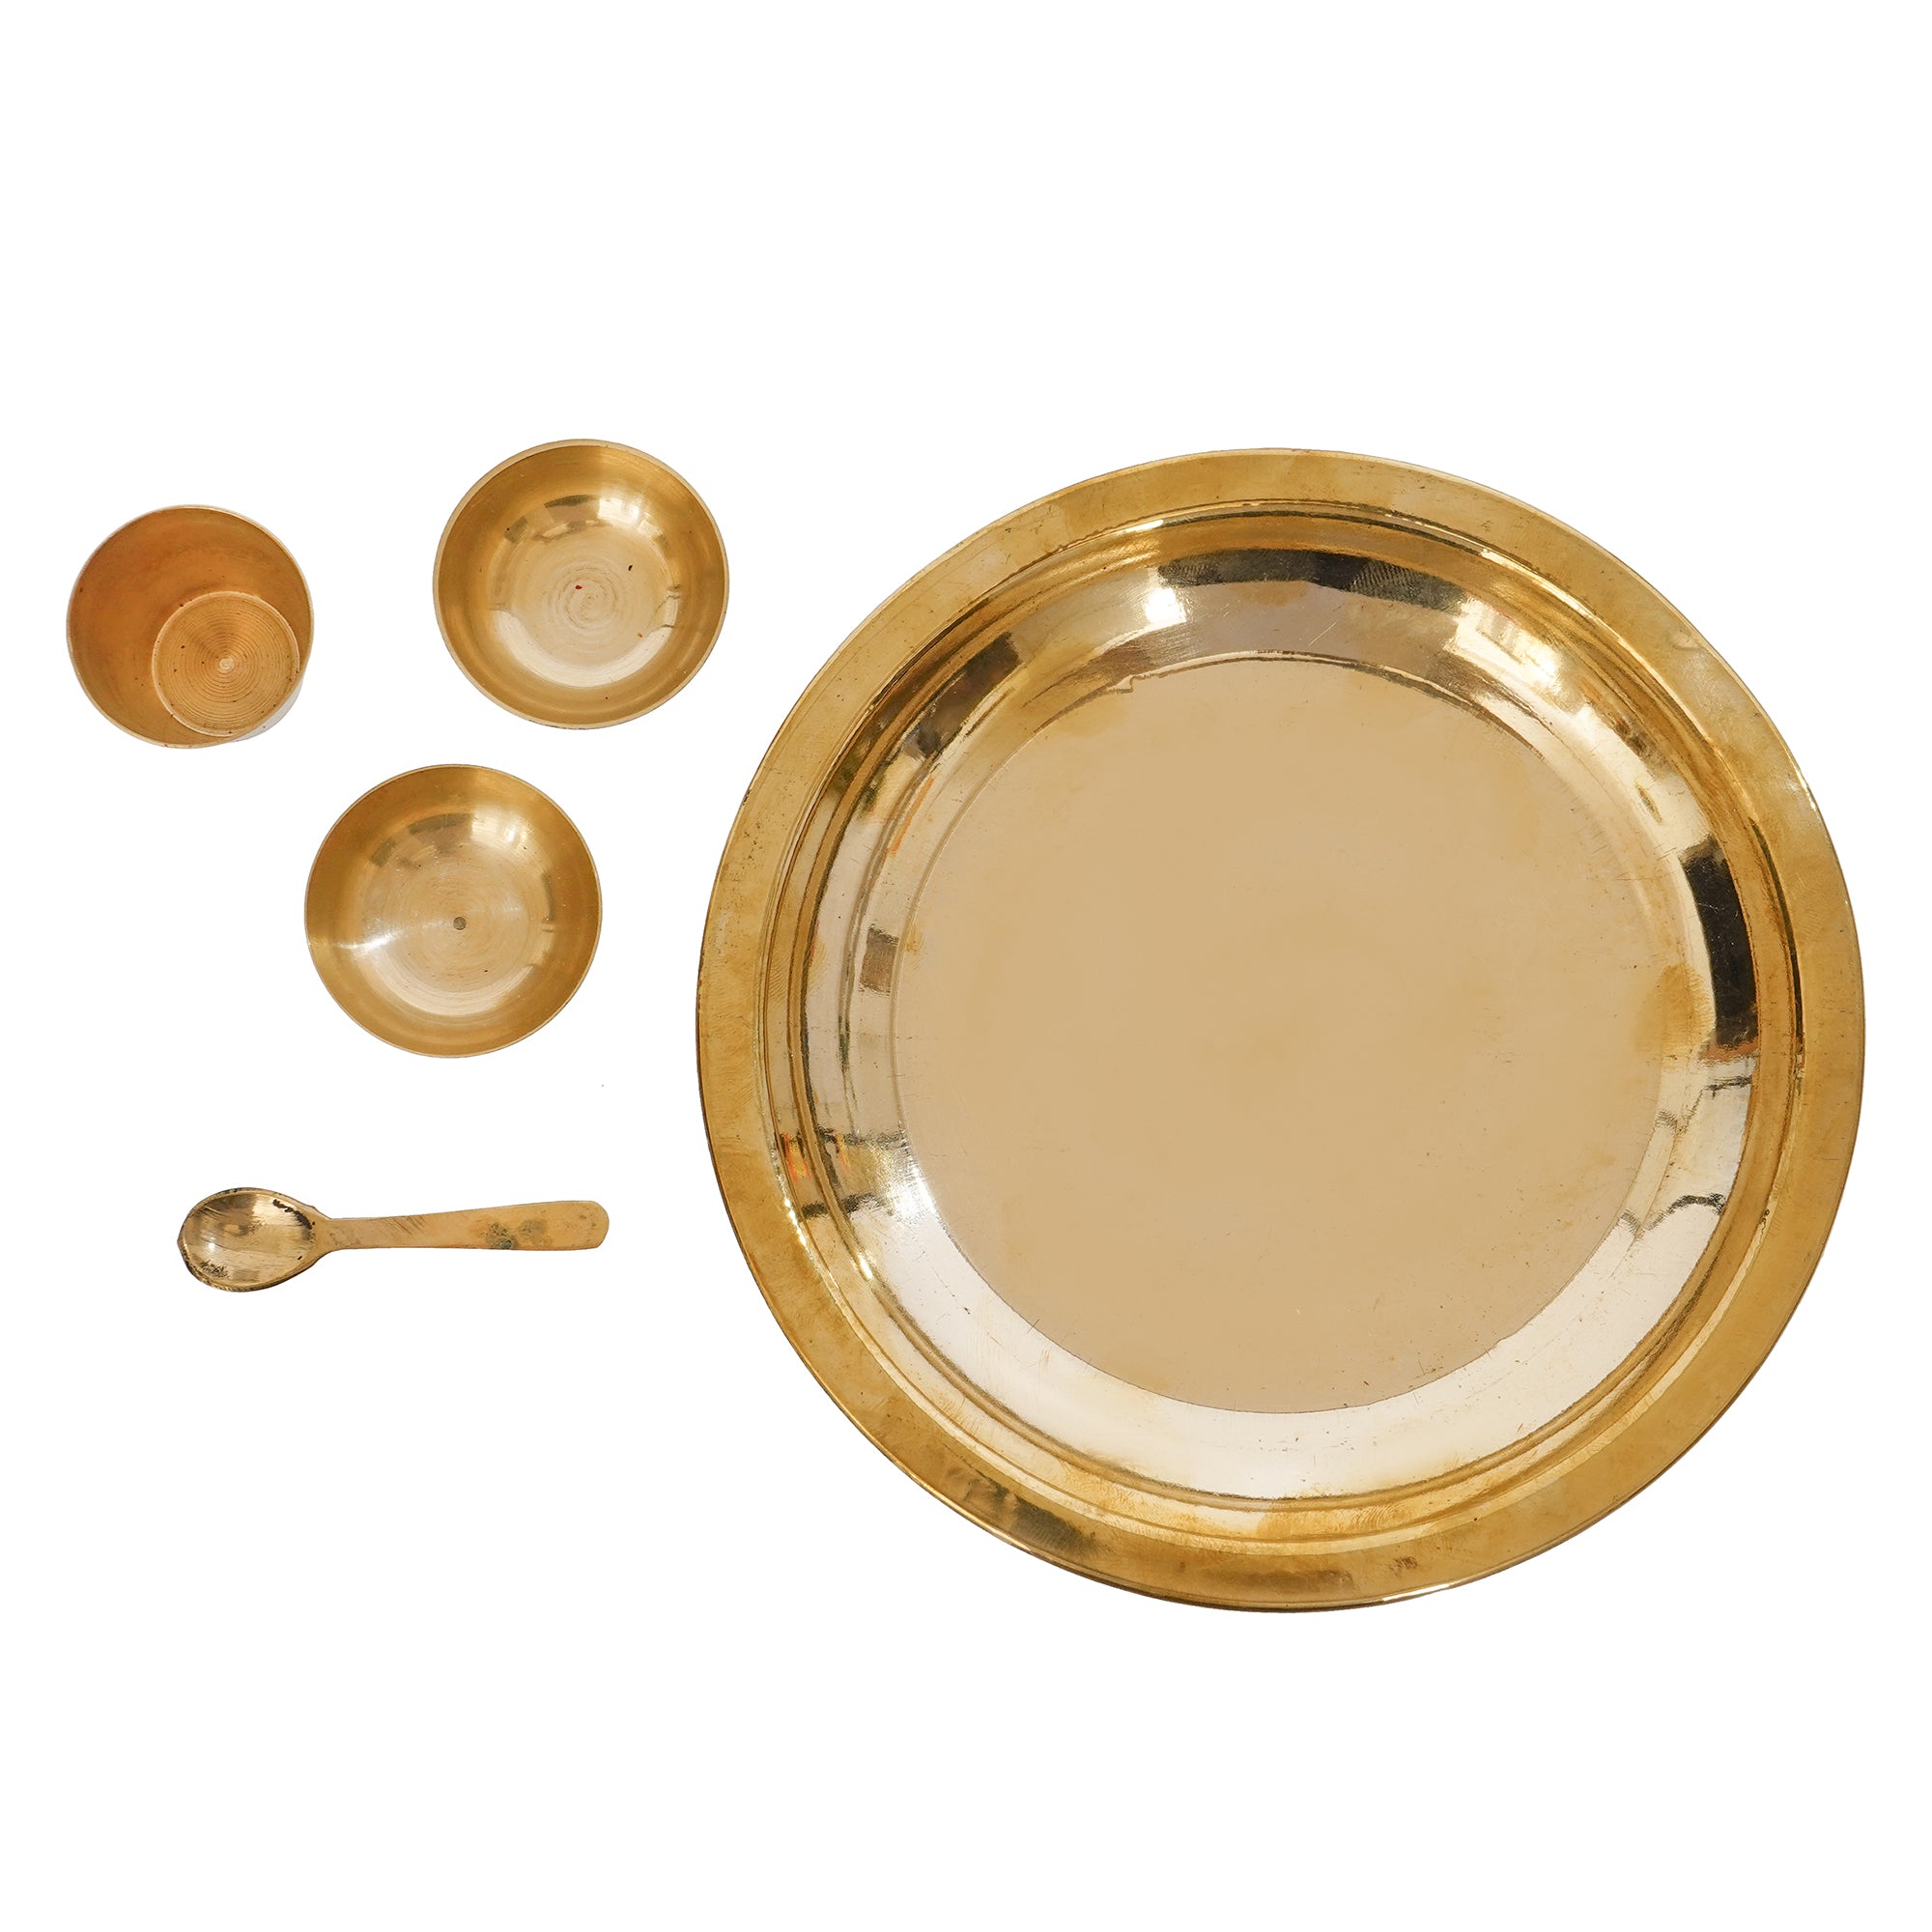 7 Inch Brass Pooja Thali with 2 Katori/Bowls, 1 Spoon and 1 Glass 4